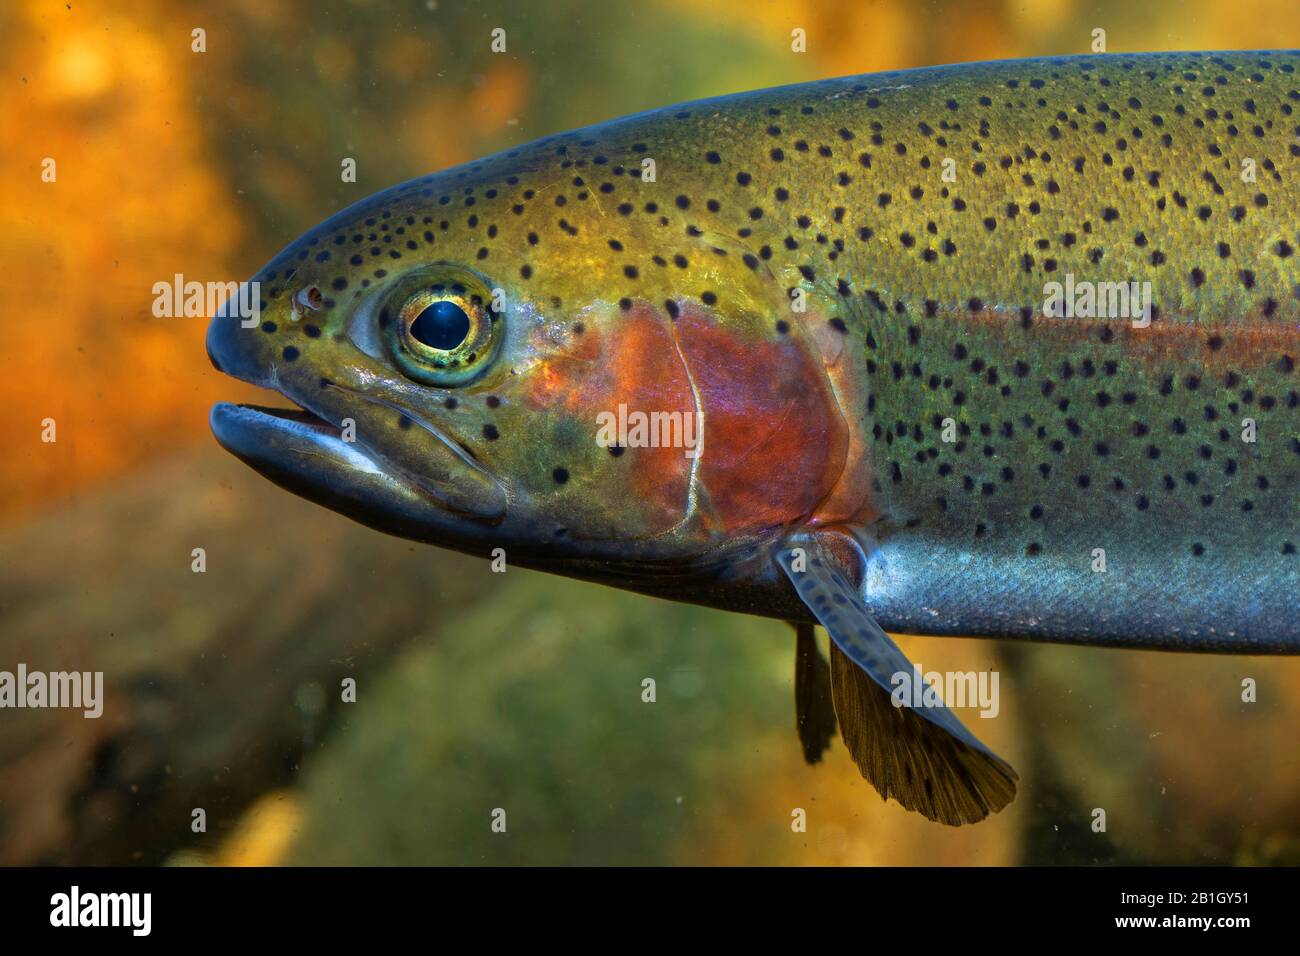 rainbow trout (Oncorhynchus mykiss, Salmo gairdneri), portrait, side view, Germany Stock Photo